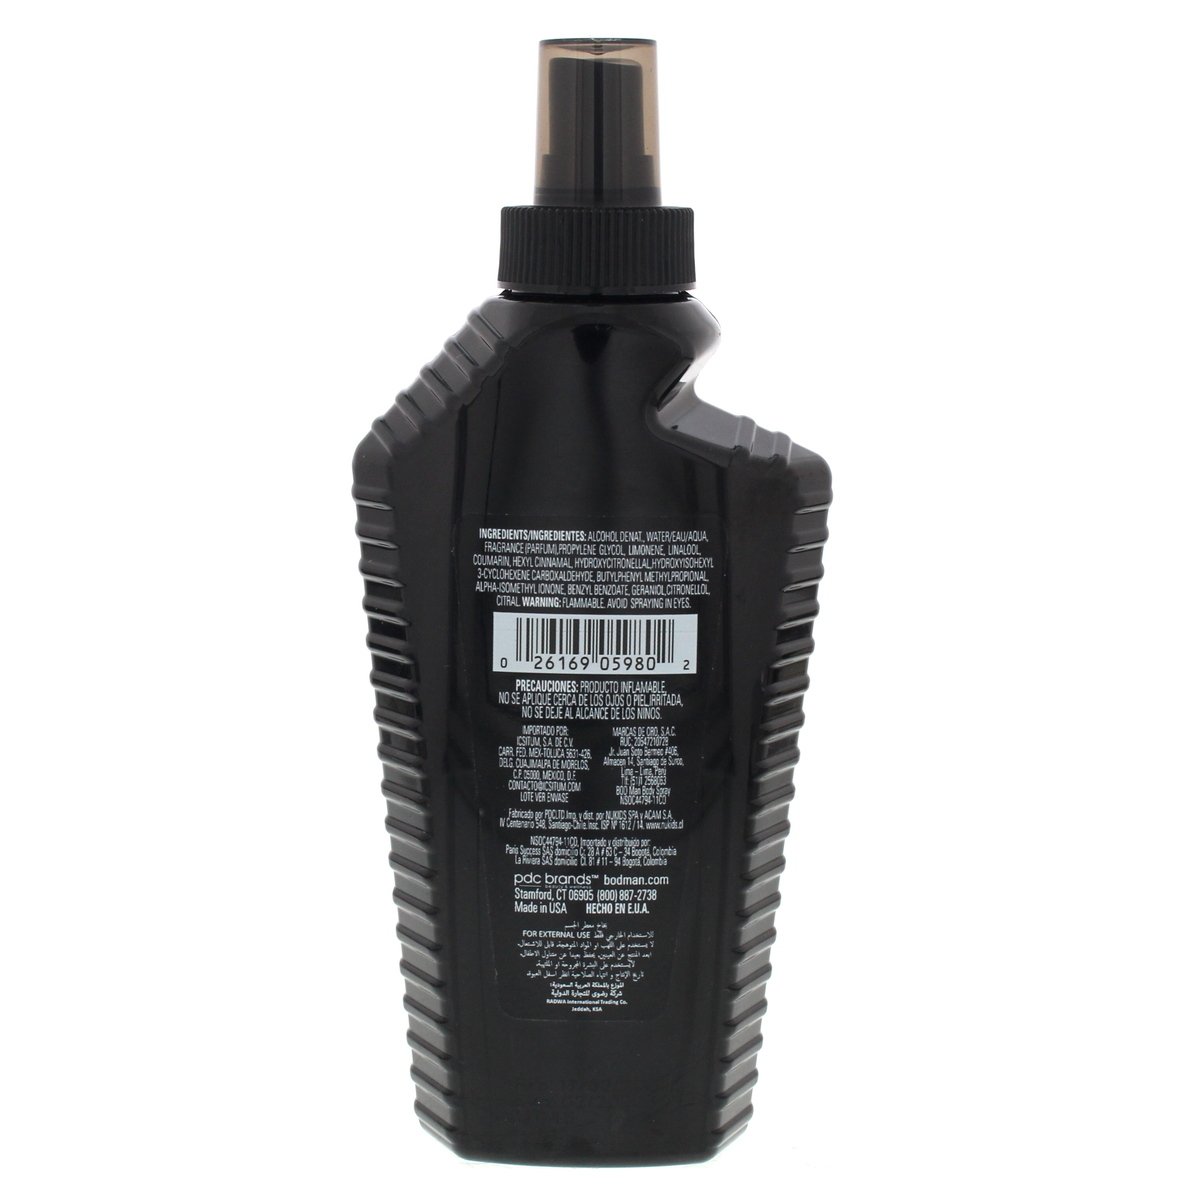 Bod Man Black Fragrance Body Spray 236 ml